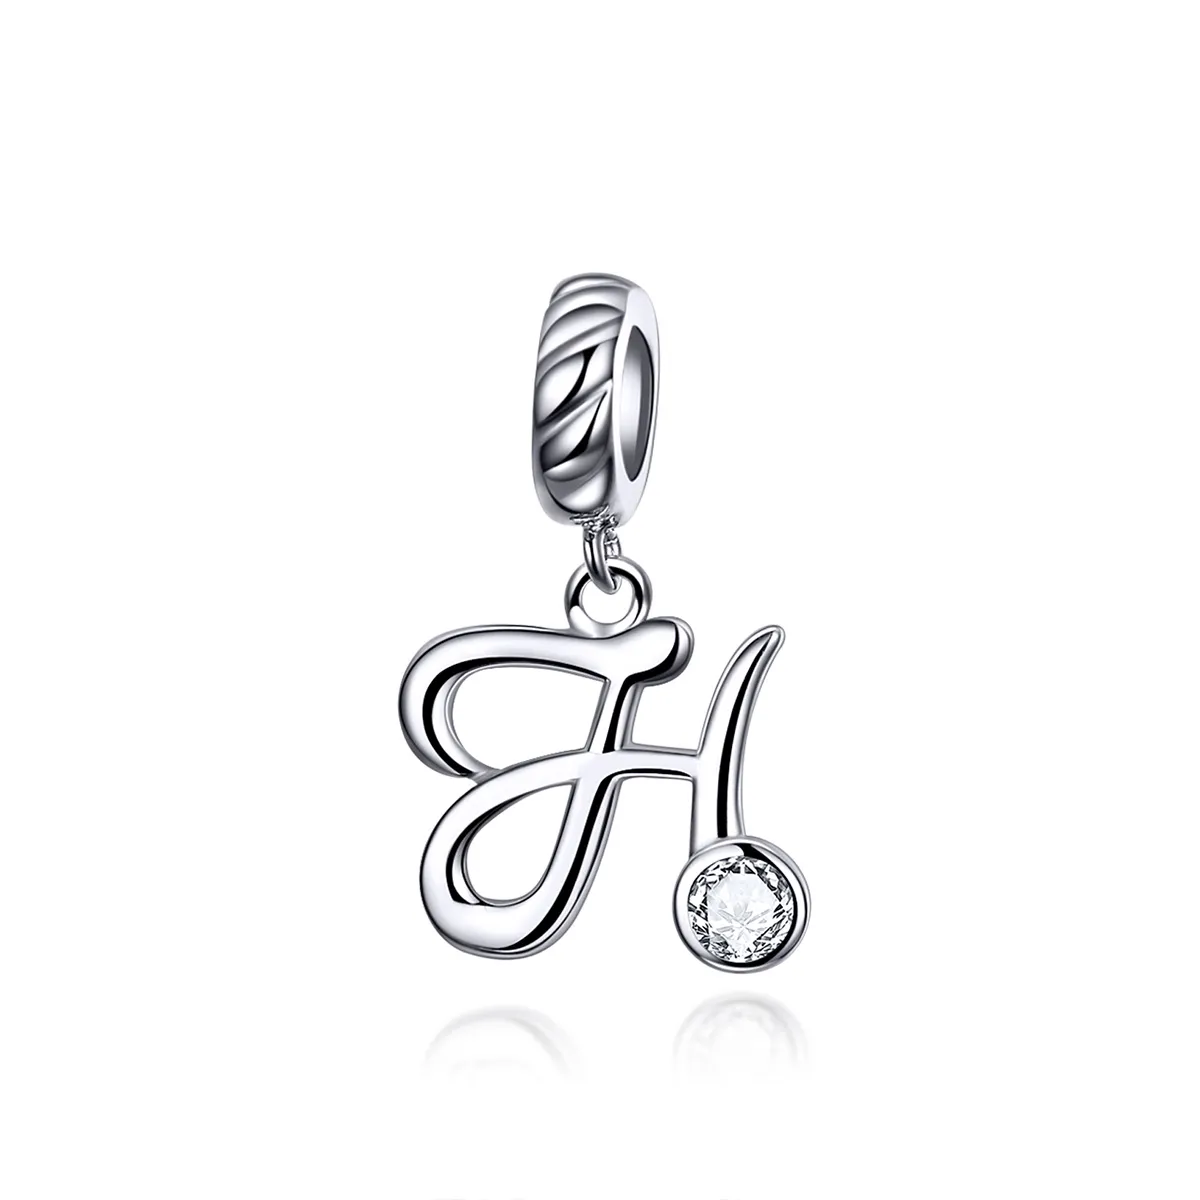 Talisman pandantiv Tip Pandora cu Litera H din argint - SCC1183-H